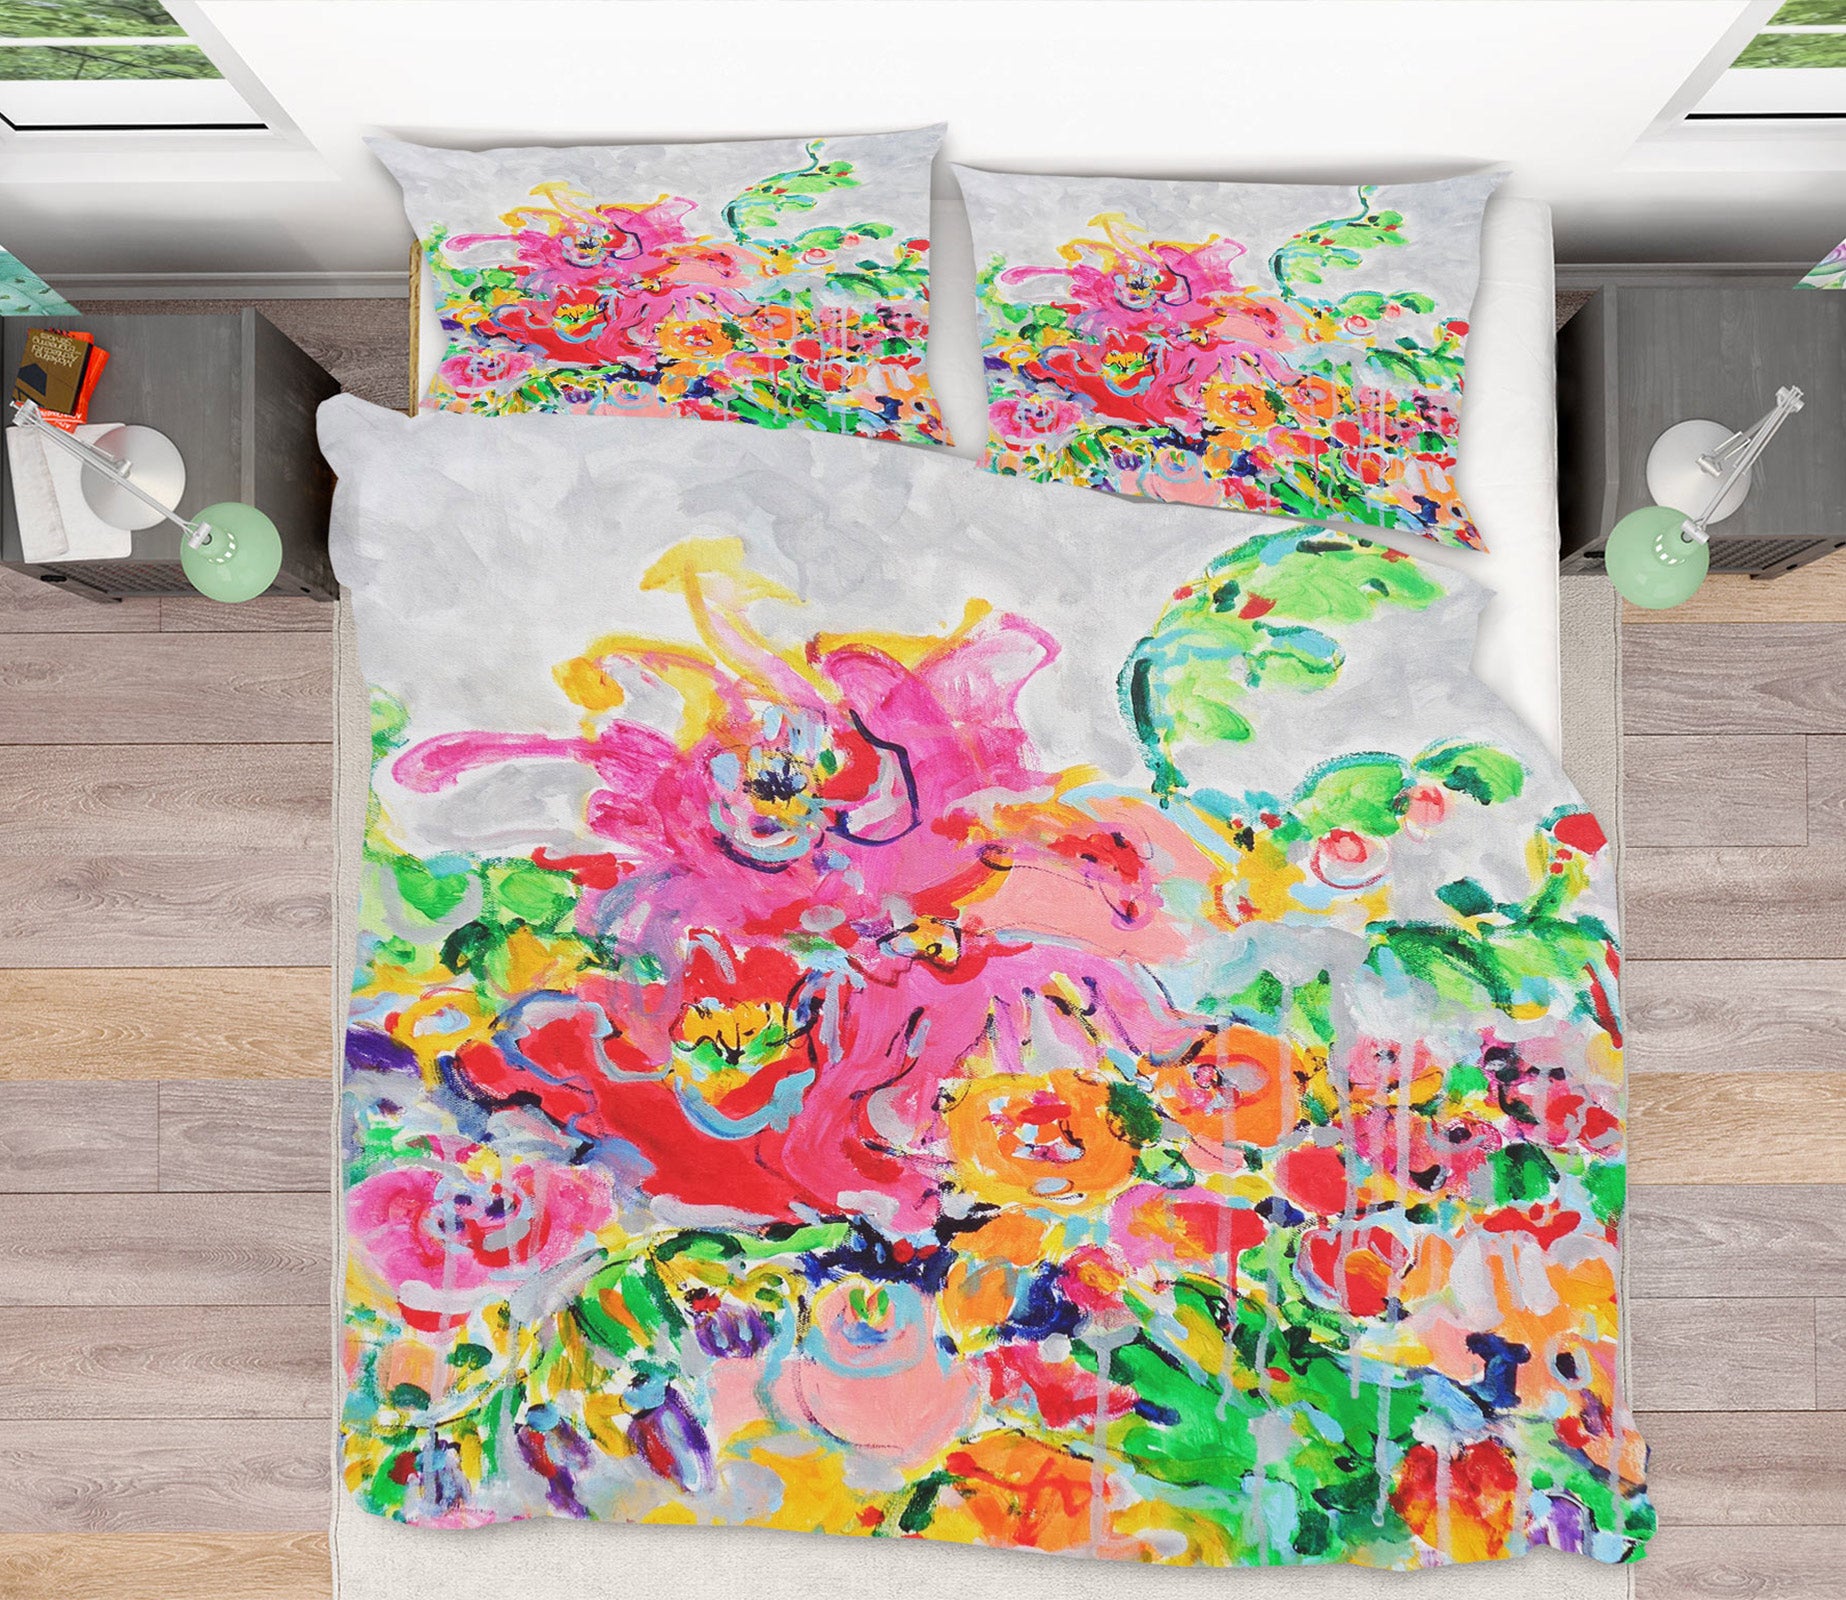 3D Colorful Petals 1225 Misako Chida Bedding Bed Pillowcases Quilt Cover Duvet Cover